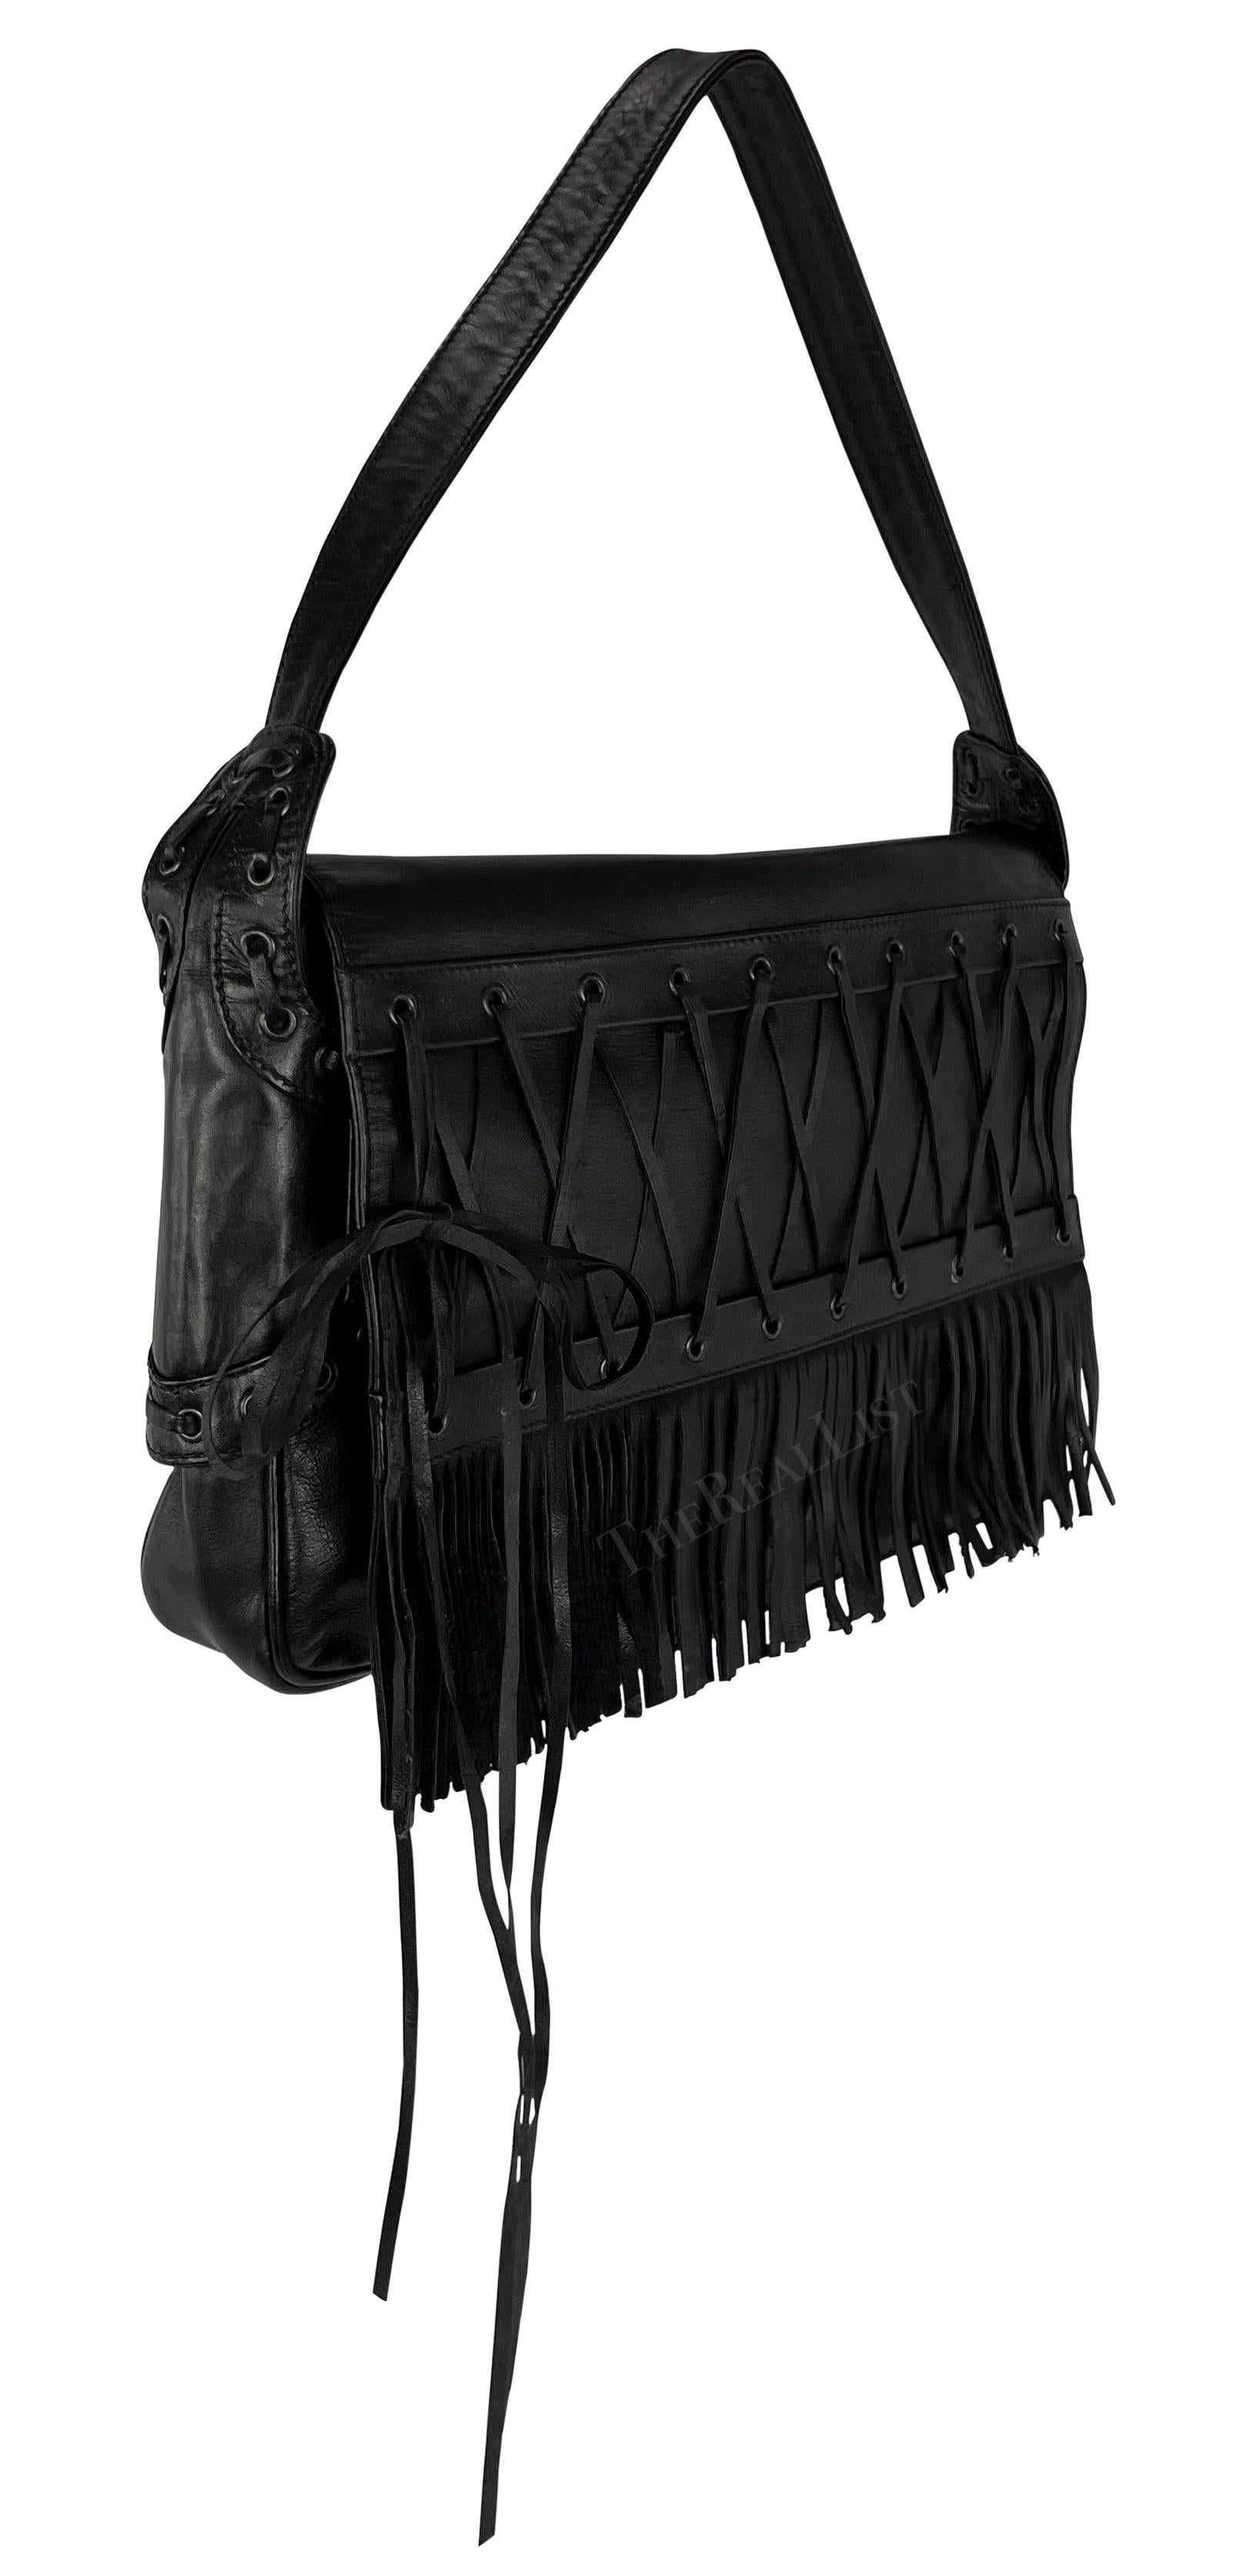 S/S 2002 Gianni Versace by Donatella Black Leather Lace Up Fringe Shoulder Bag For Sale 4